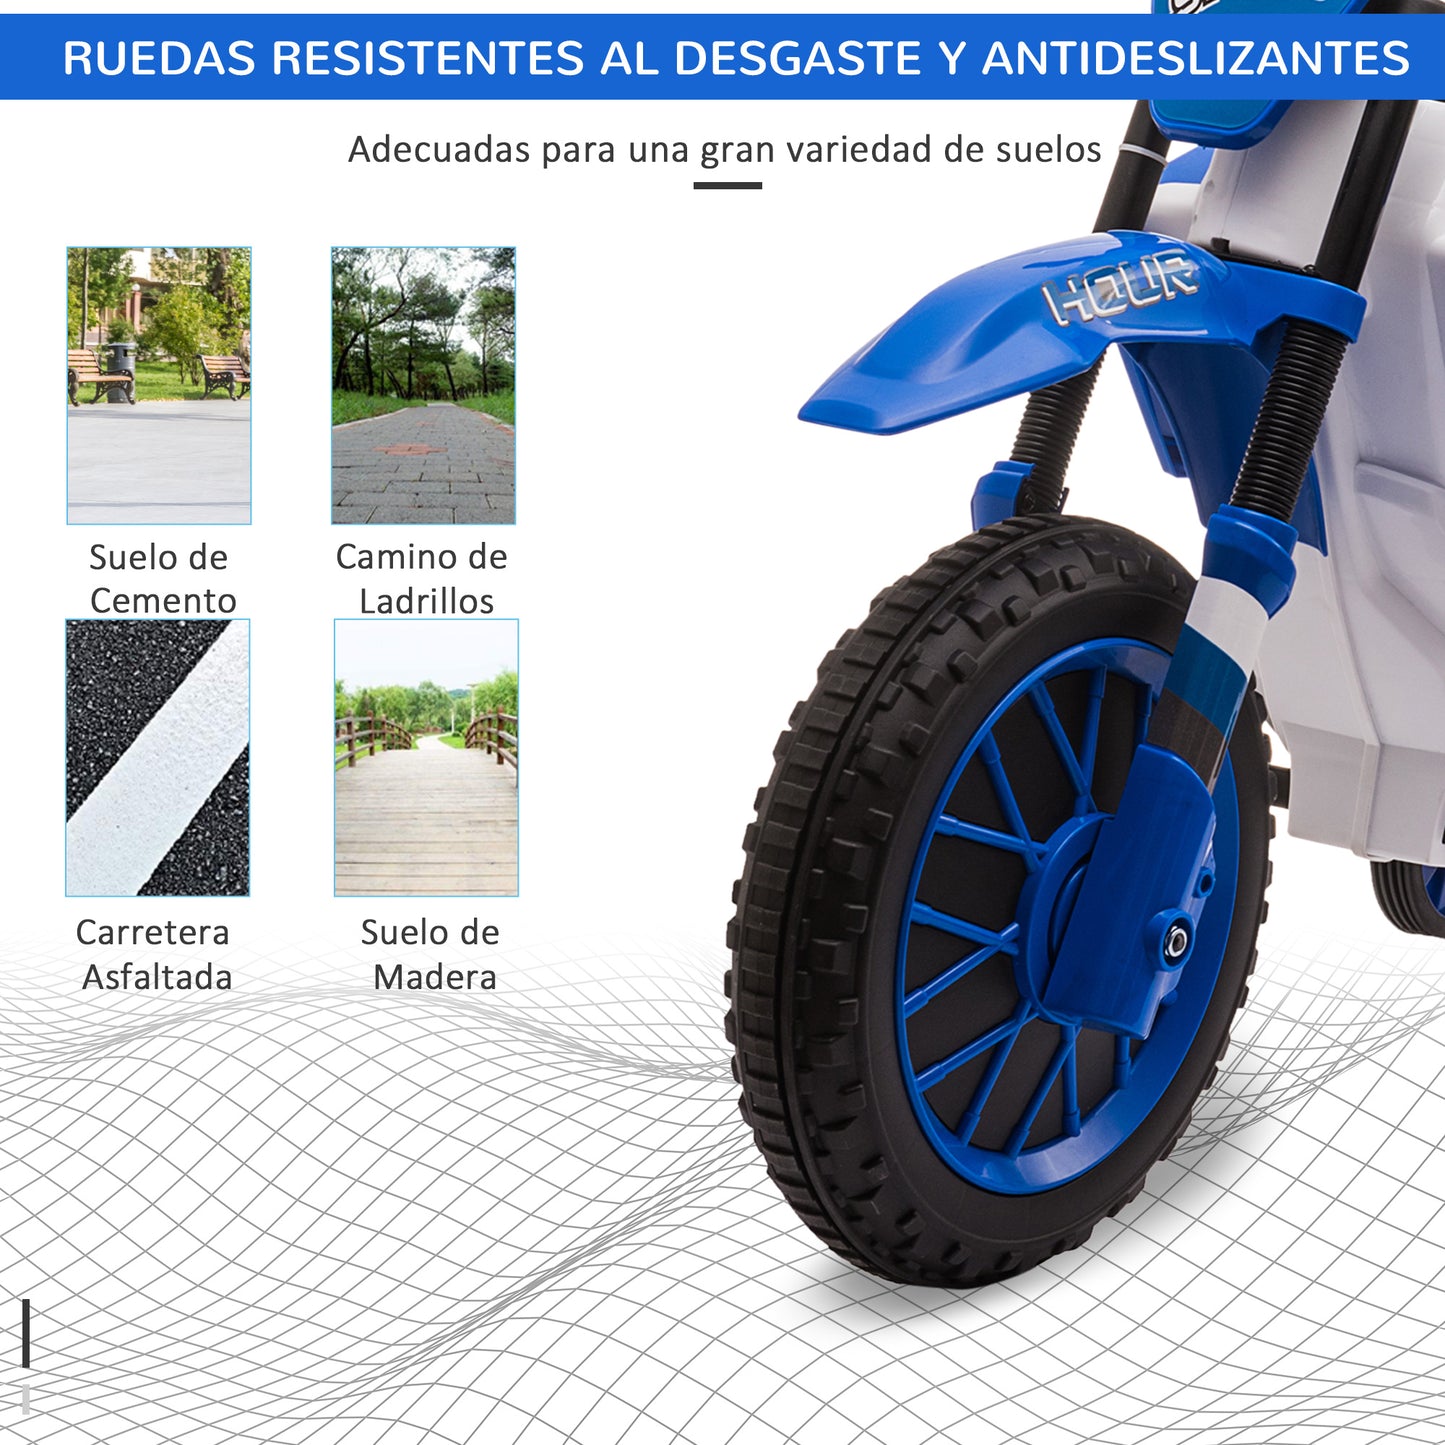 HOMCOM Moto Eléctrica para Niños de +3 Años 12V Moto de Juguete Infantil con 2 Ruedas de Equilibrio Velocidad Máx. 8 km/h Arranque Suave 106,5x51,5x68 cm Azul